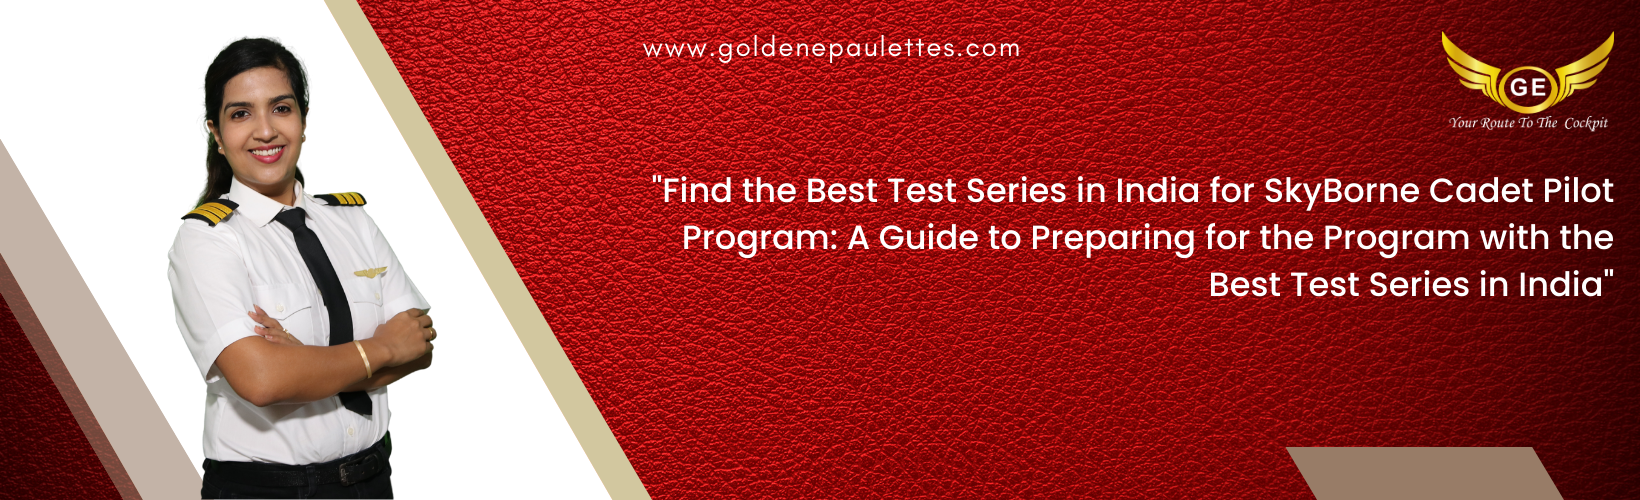 Finding the Best Test Series in India for the SkyBorne Cadet Pilot Program